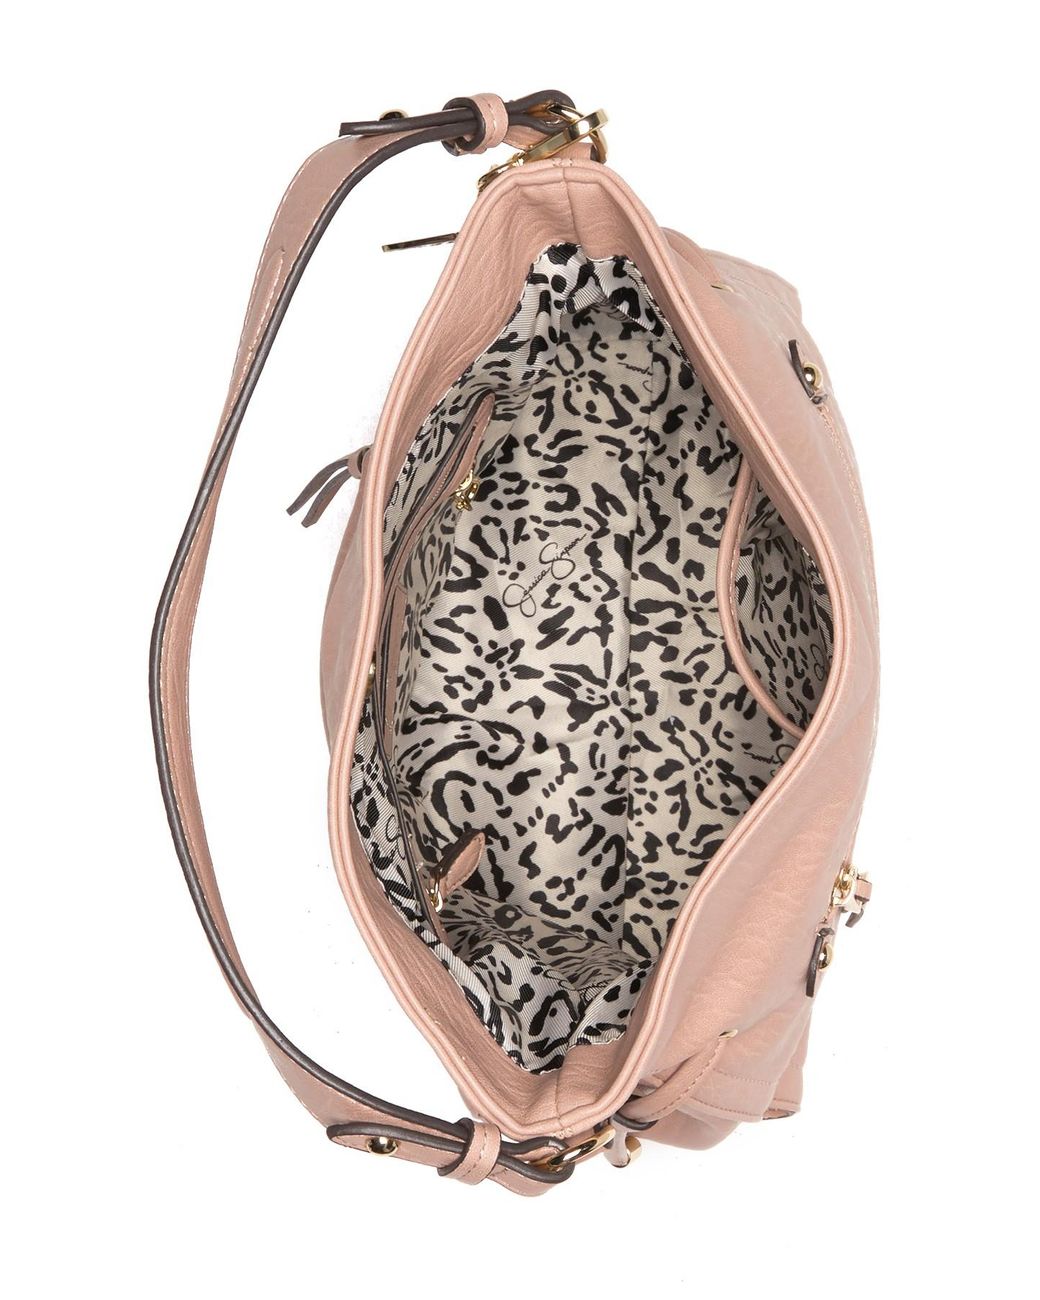 Jessica Simpson | Bags | Jessica Simpson Kate Faux Patent Leopard Leather  Wristlet Purse | Poshmark